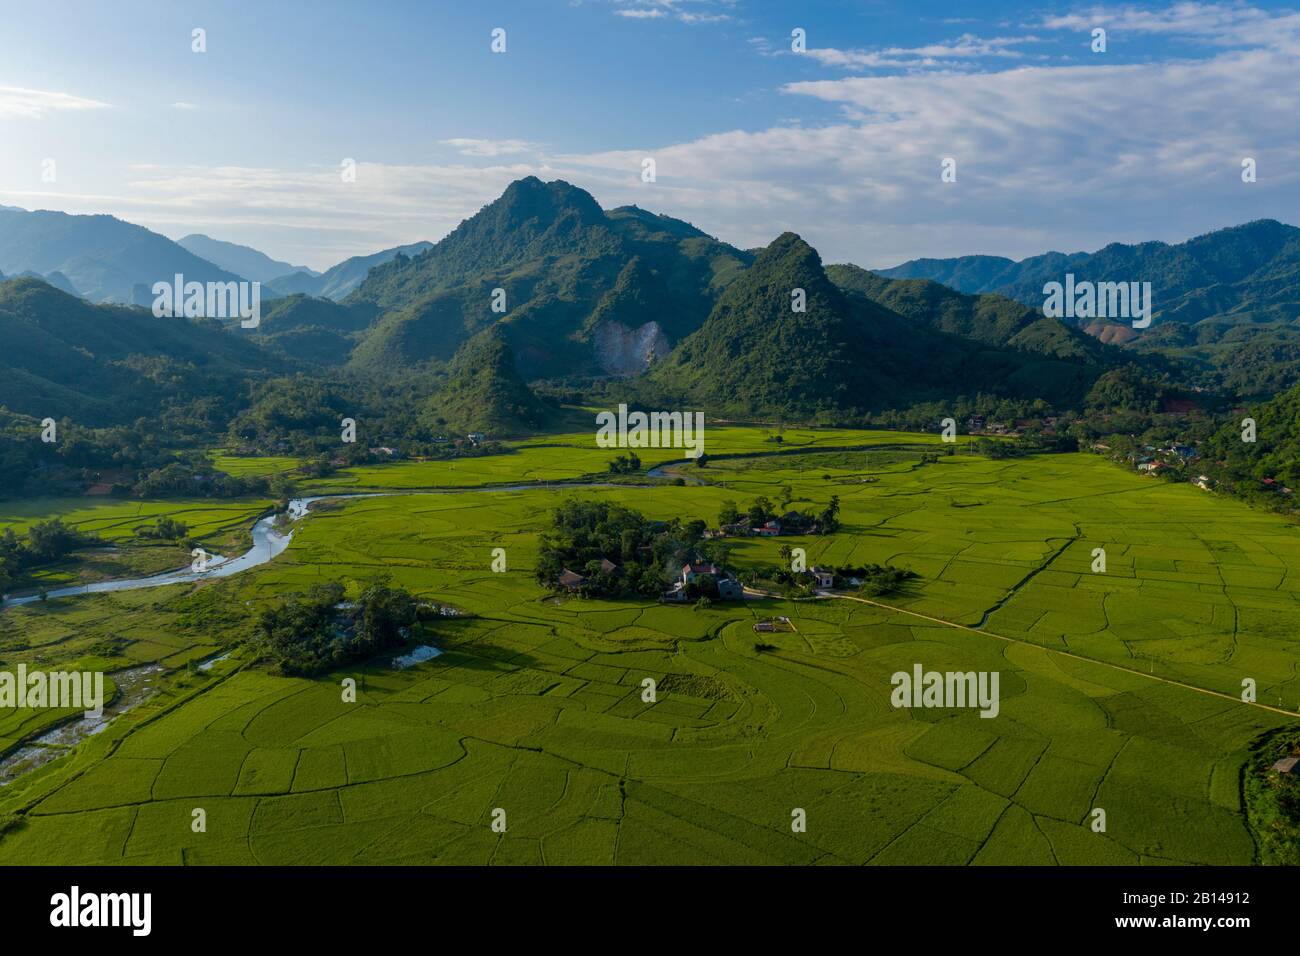 Striking mountains with river and rice fields near Hanoi, Vietnam Stock Photo